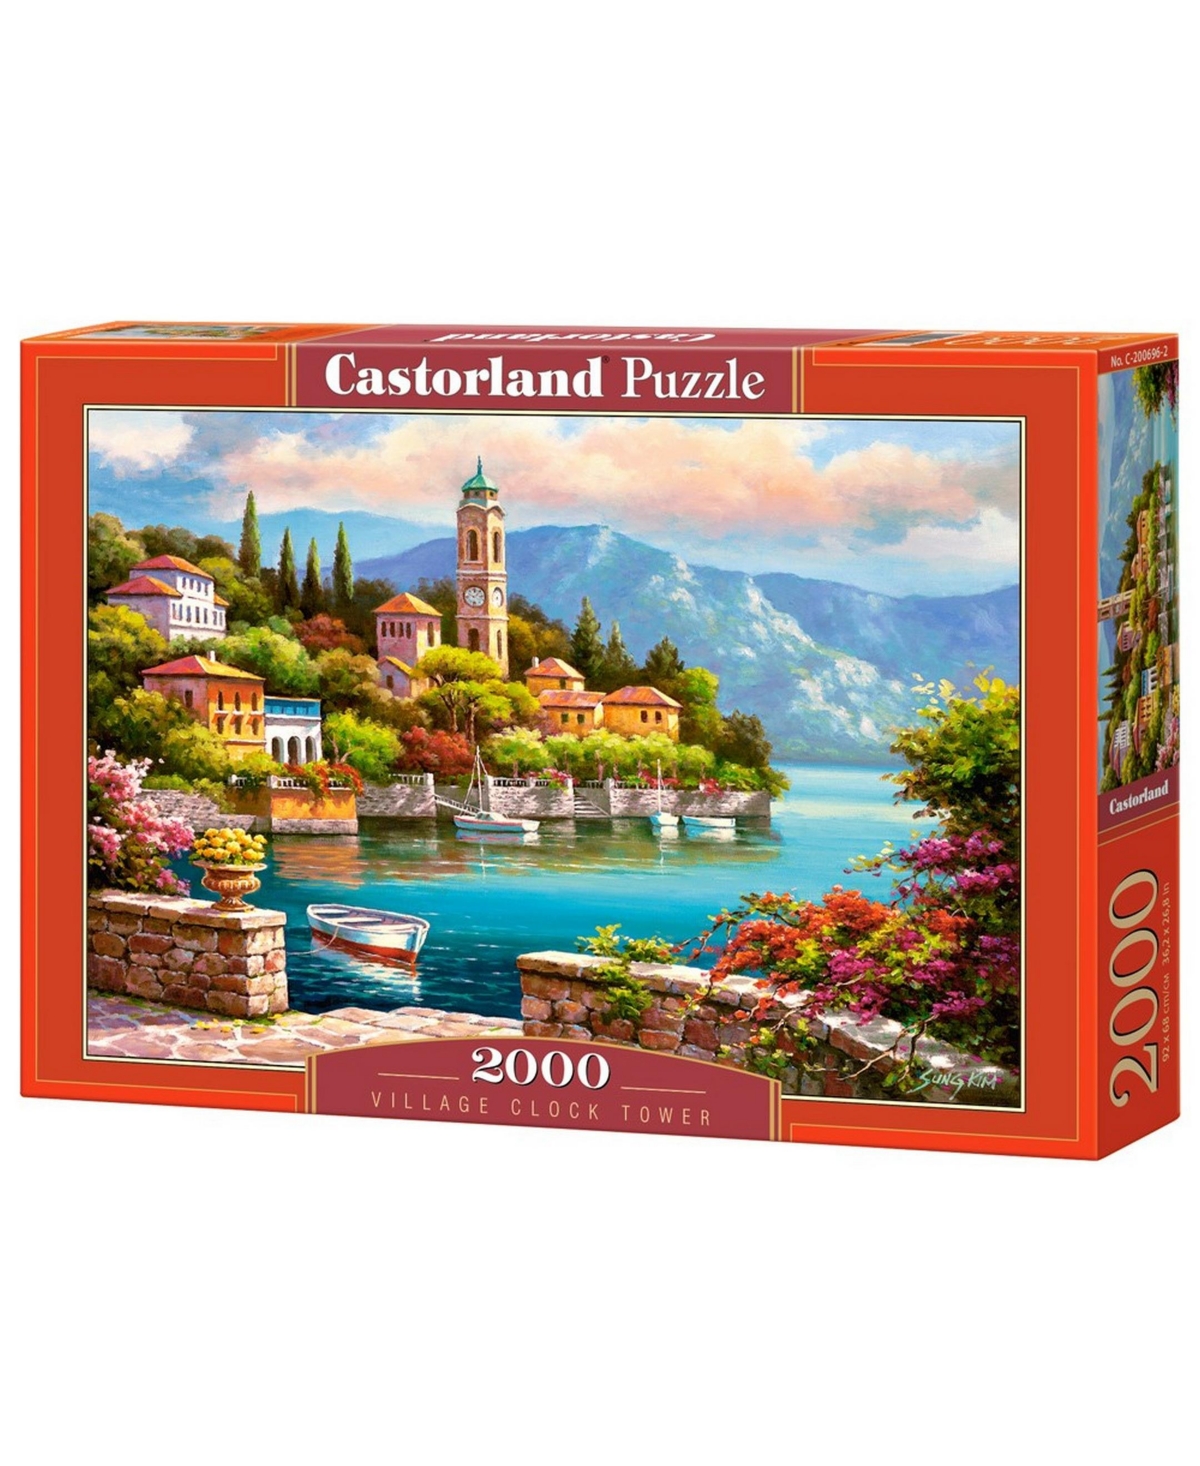 Castorland Village Clock Tower Jigsaw Puzzle Set, 2000 Piece In Multicolor